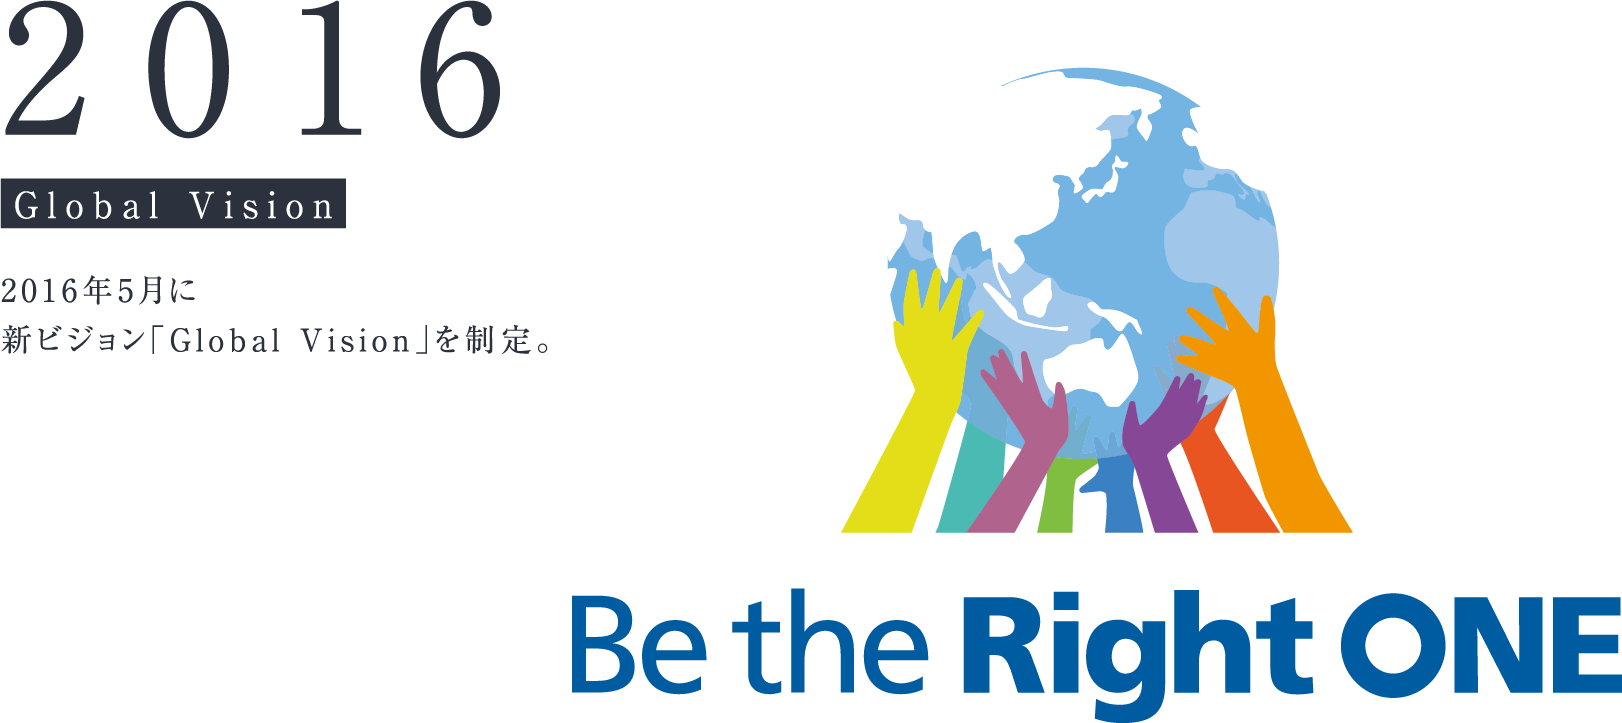 2016 Global Vision―次の10年に向けて（2016年策定）― 2016年5月に次の10年間の方向性を示すガイドライン・道標として、新ビジョン「Global Vision」を制定。Be the Right ONE